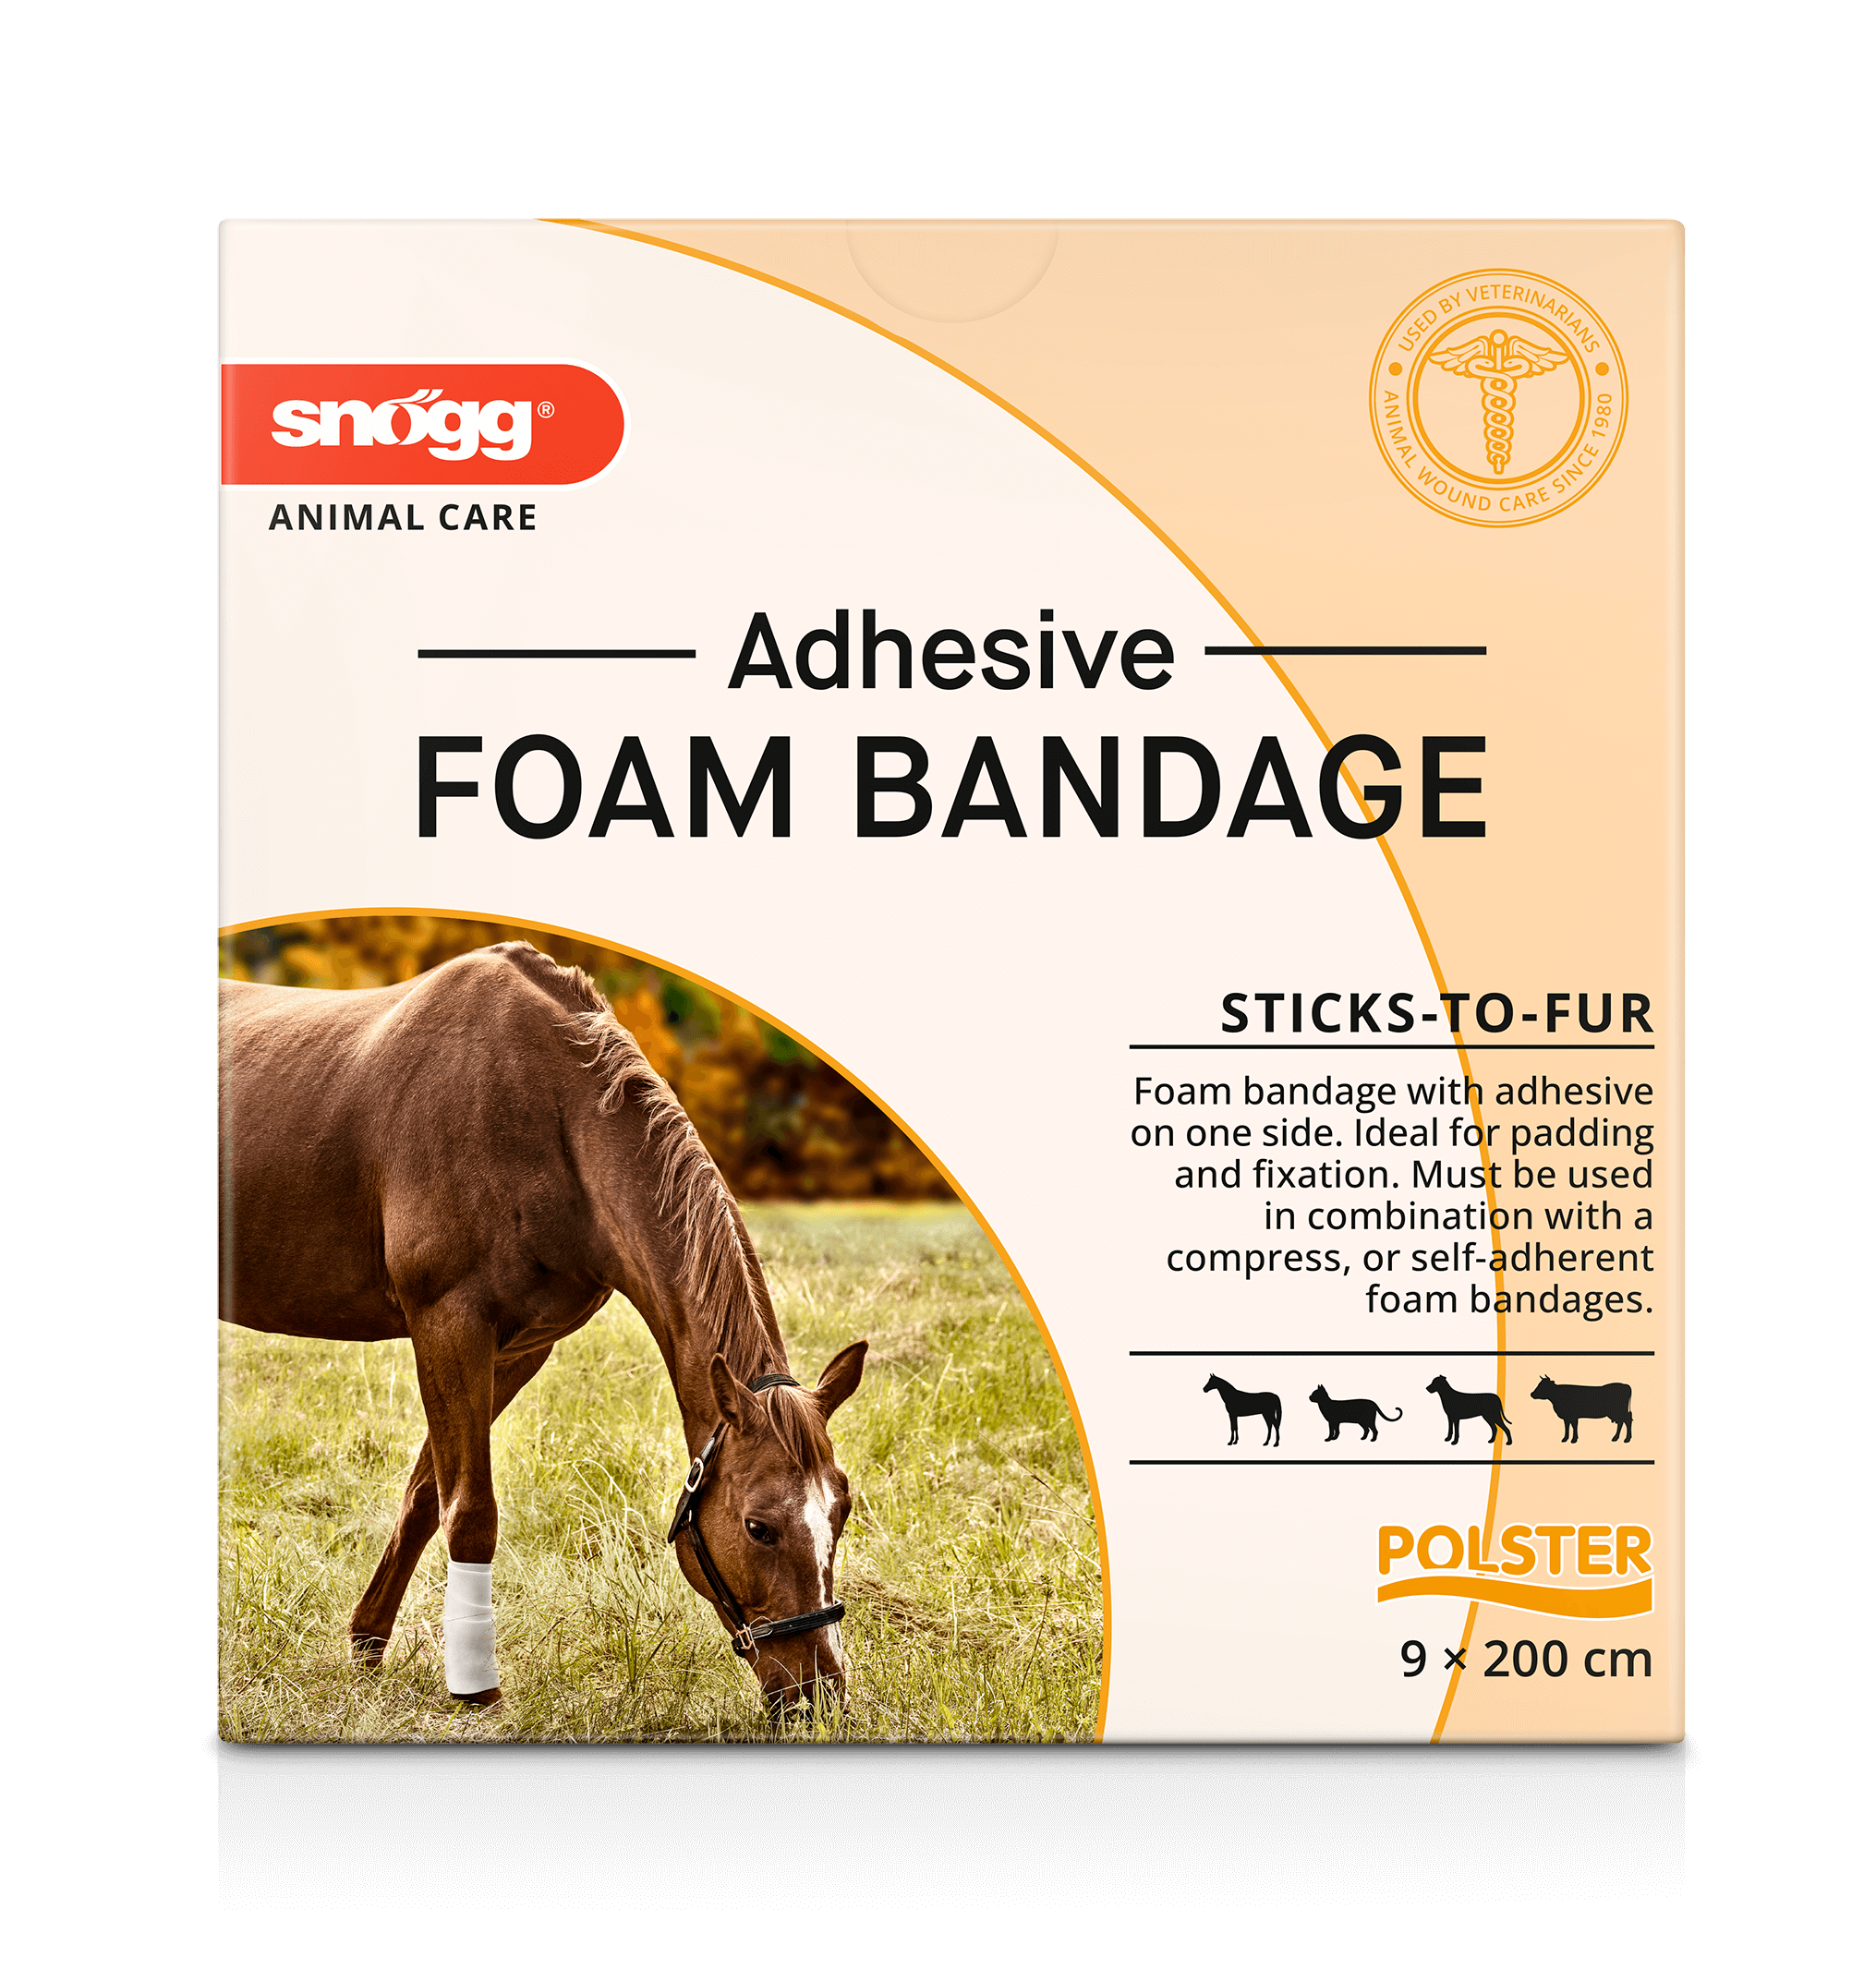 Snögg Animal Polster / Snögg Animal Care Foam Bandage Adhesive